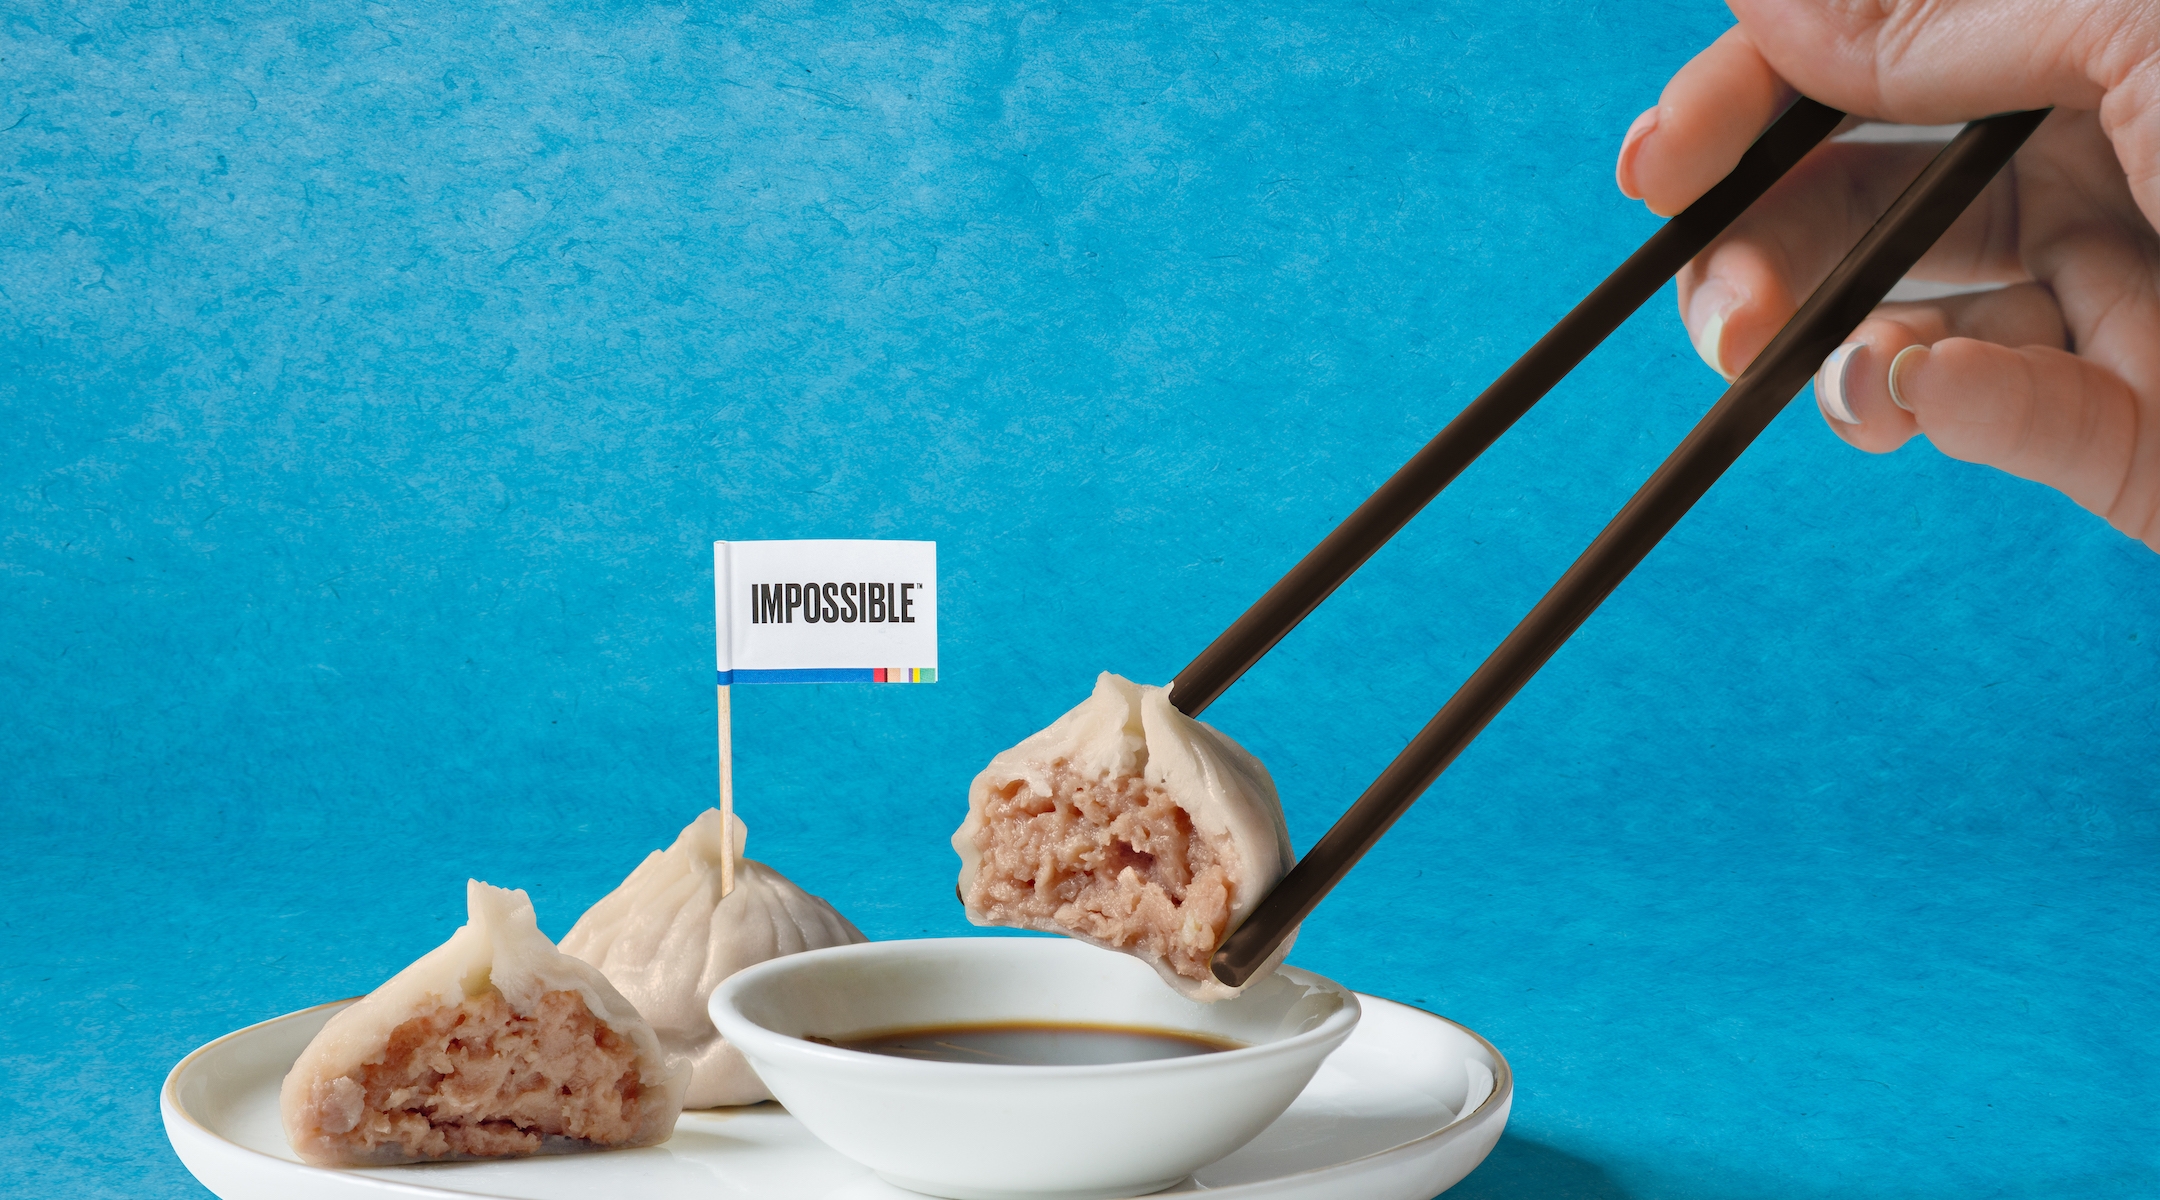 Impossible Pork dumplings